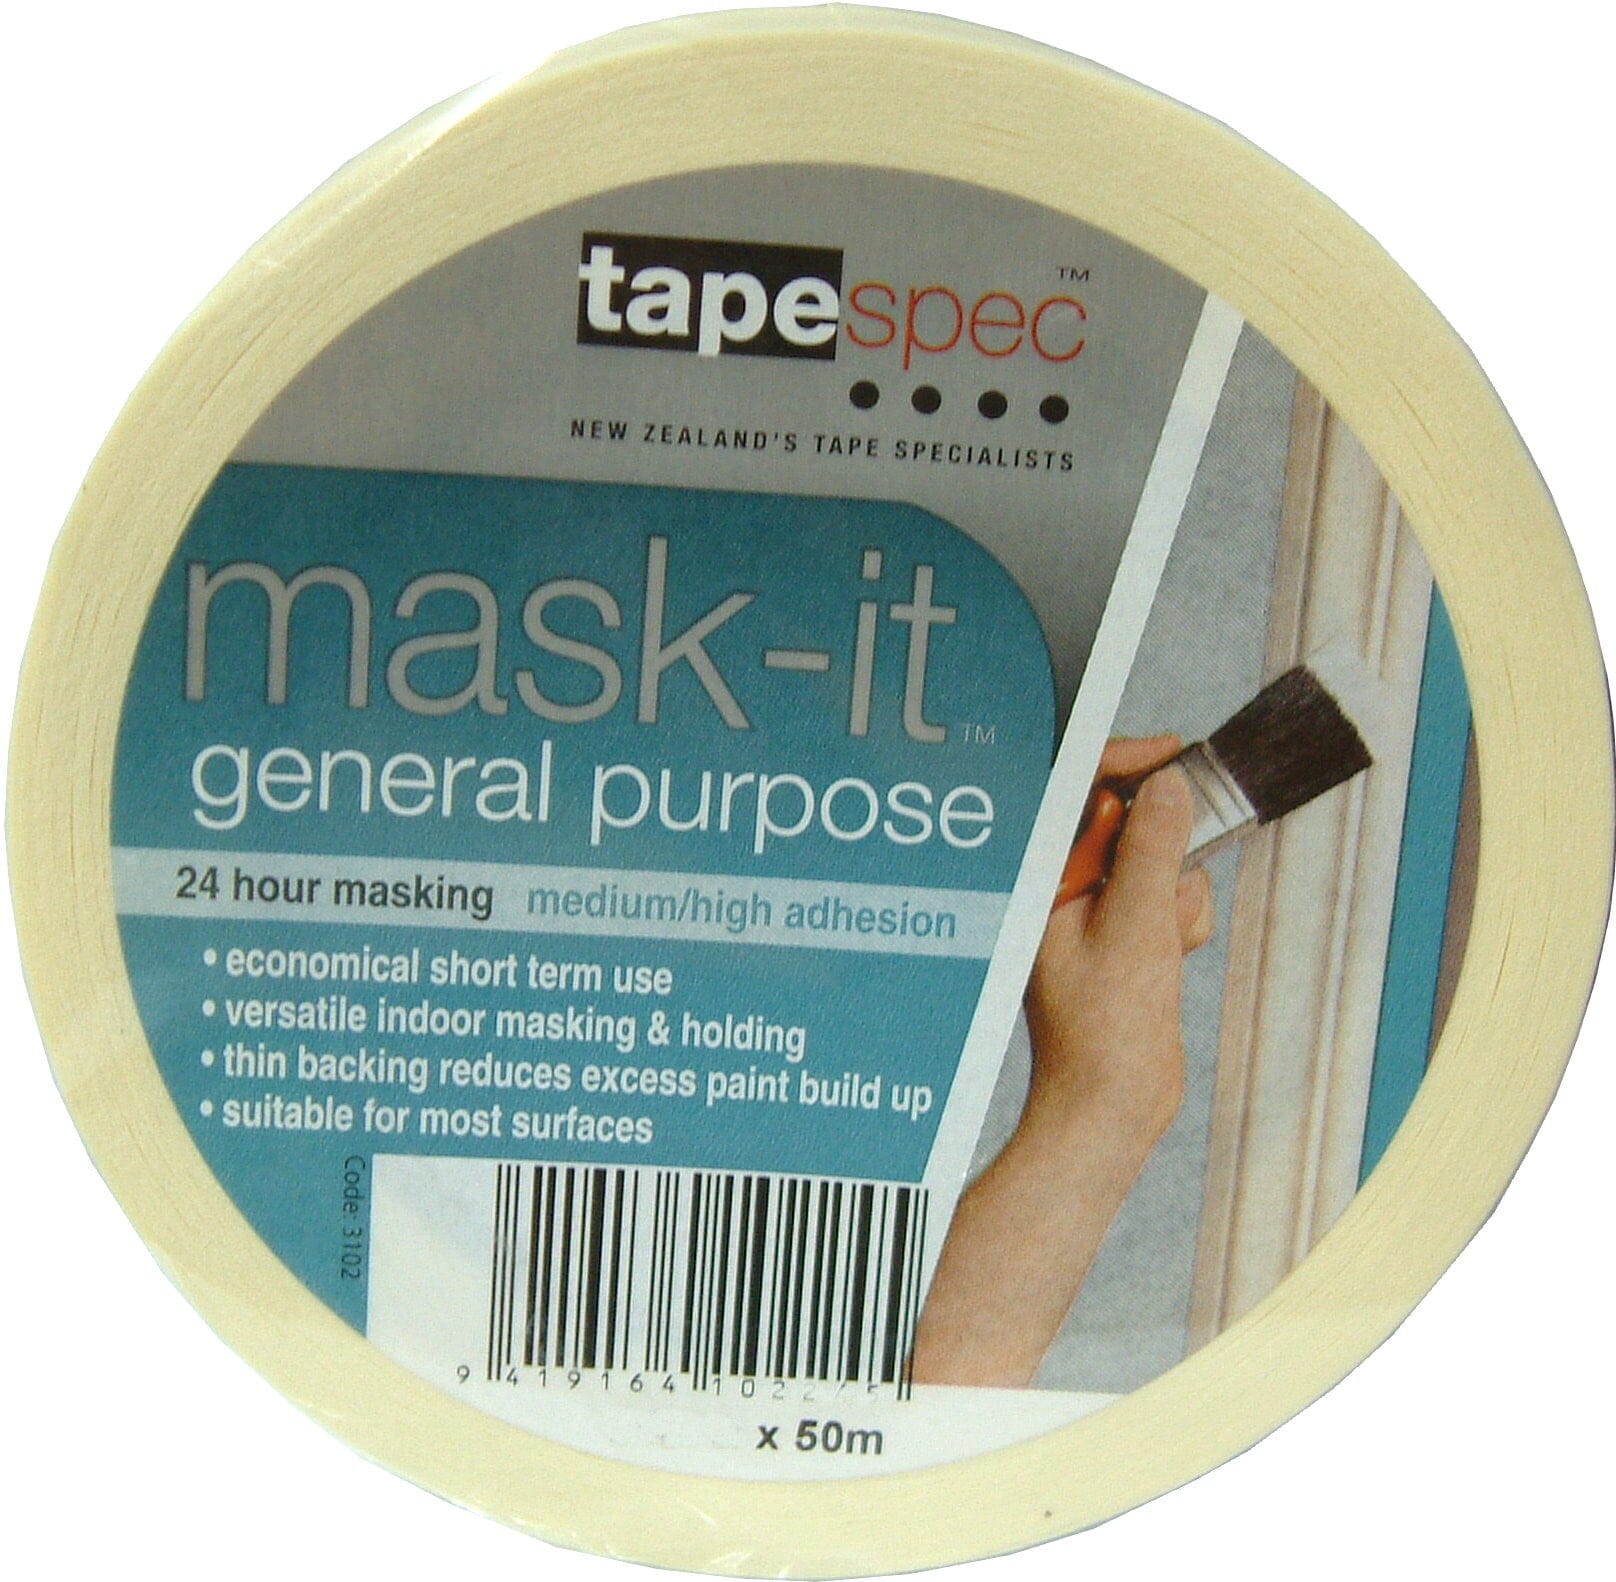 Tapespec Masking Tape - 50m Roll #312 24mm Mask-it